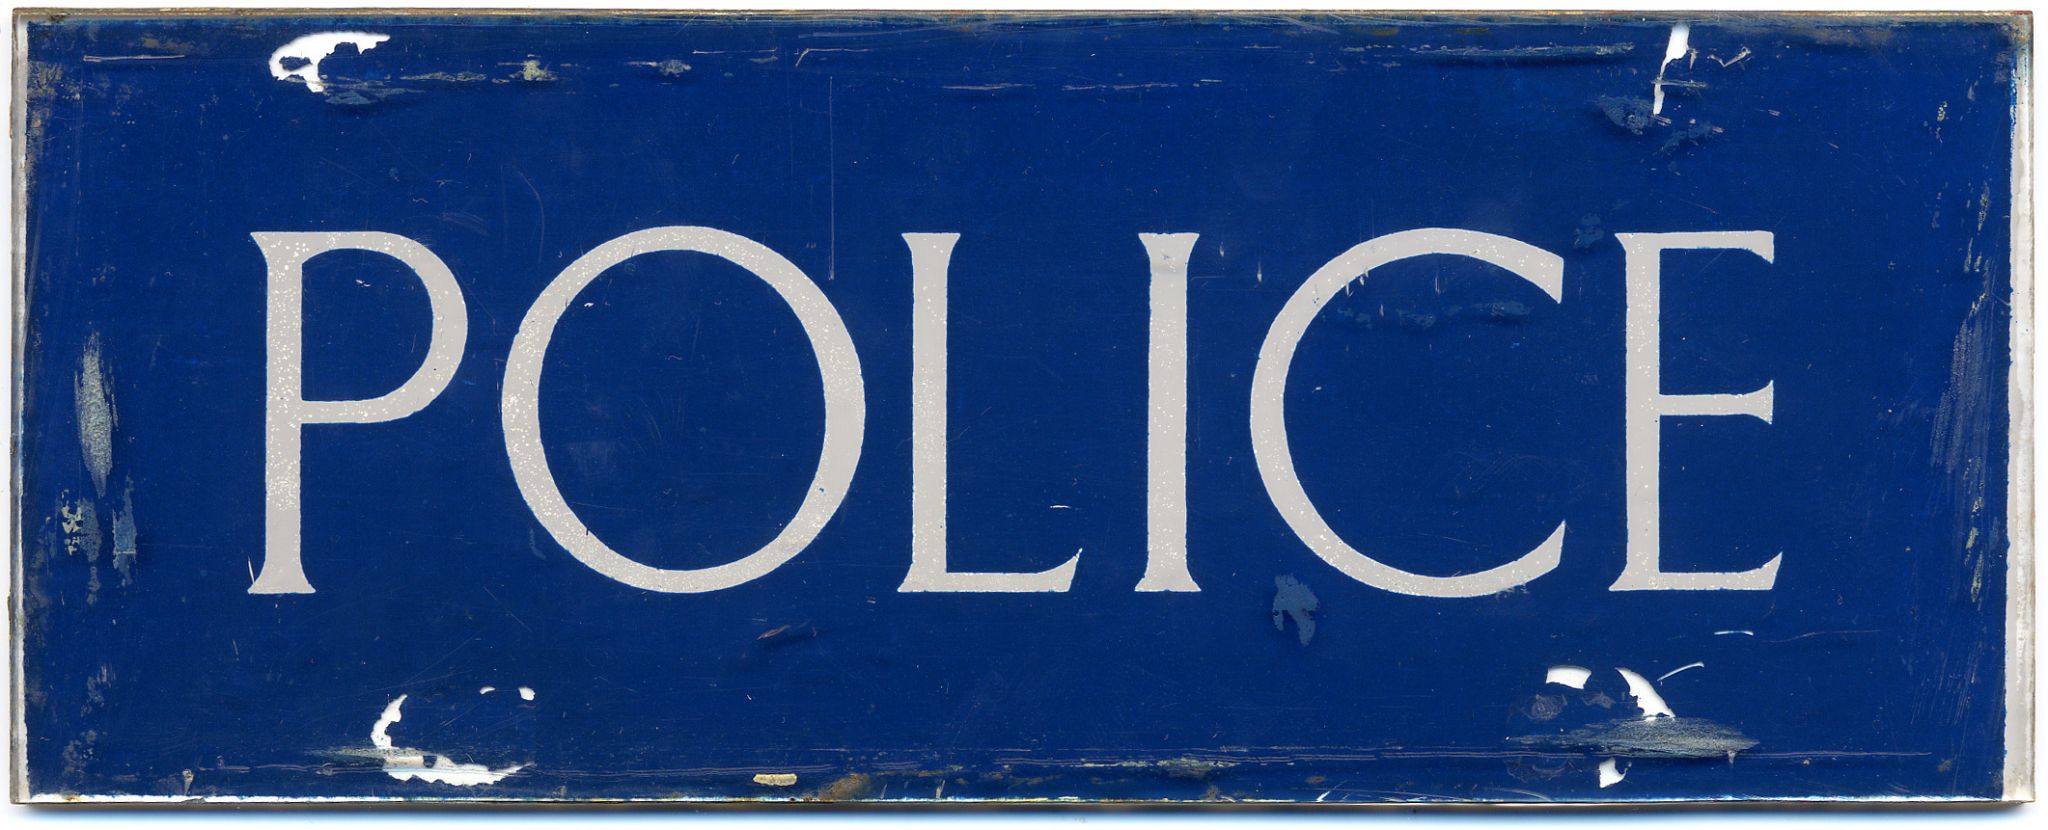 Police-Post-Sideplate-photo.jpg